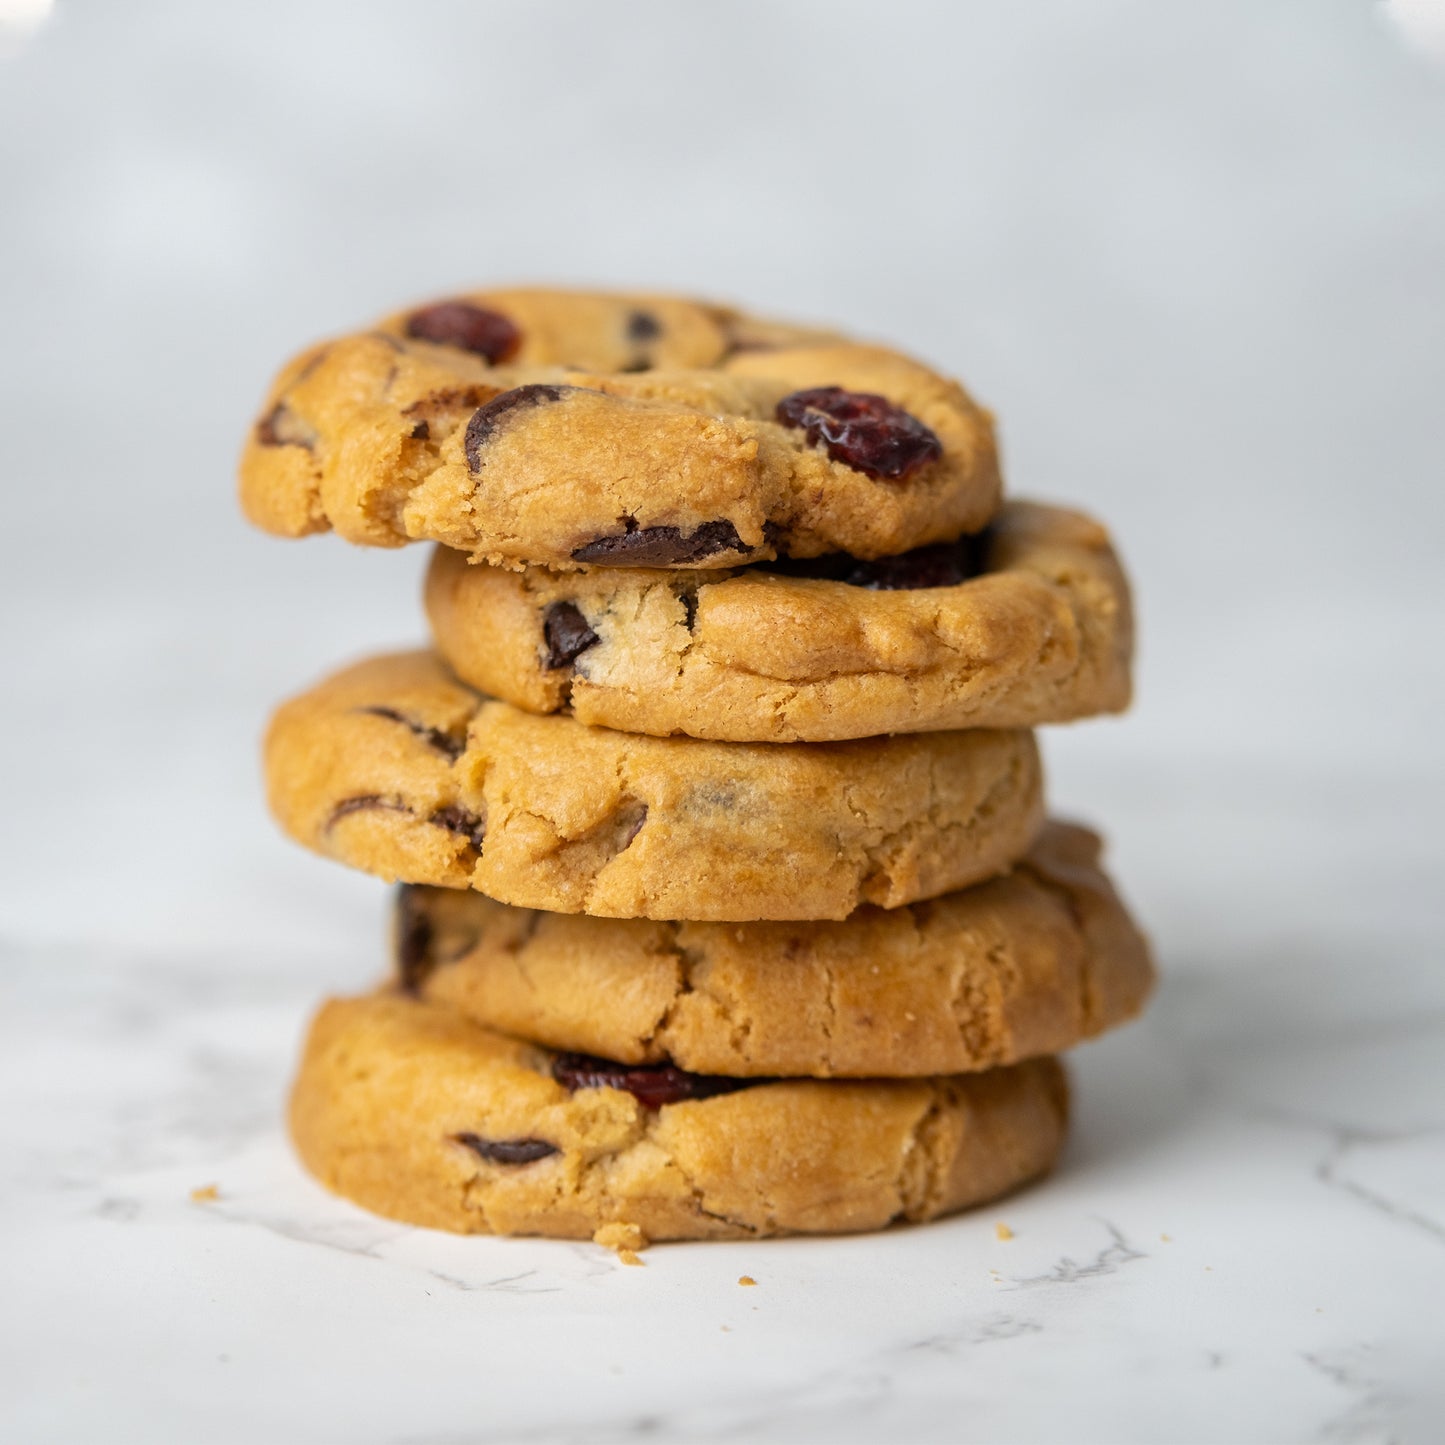 Cookies (5 pcs minimum, per variant)